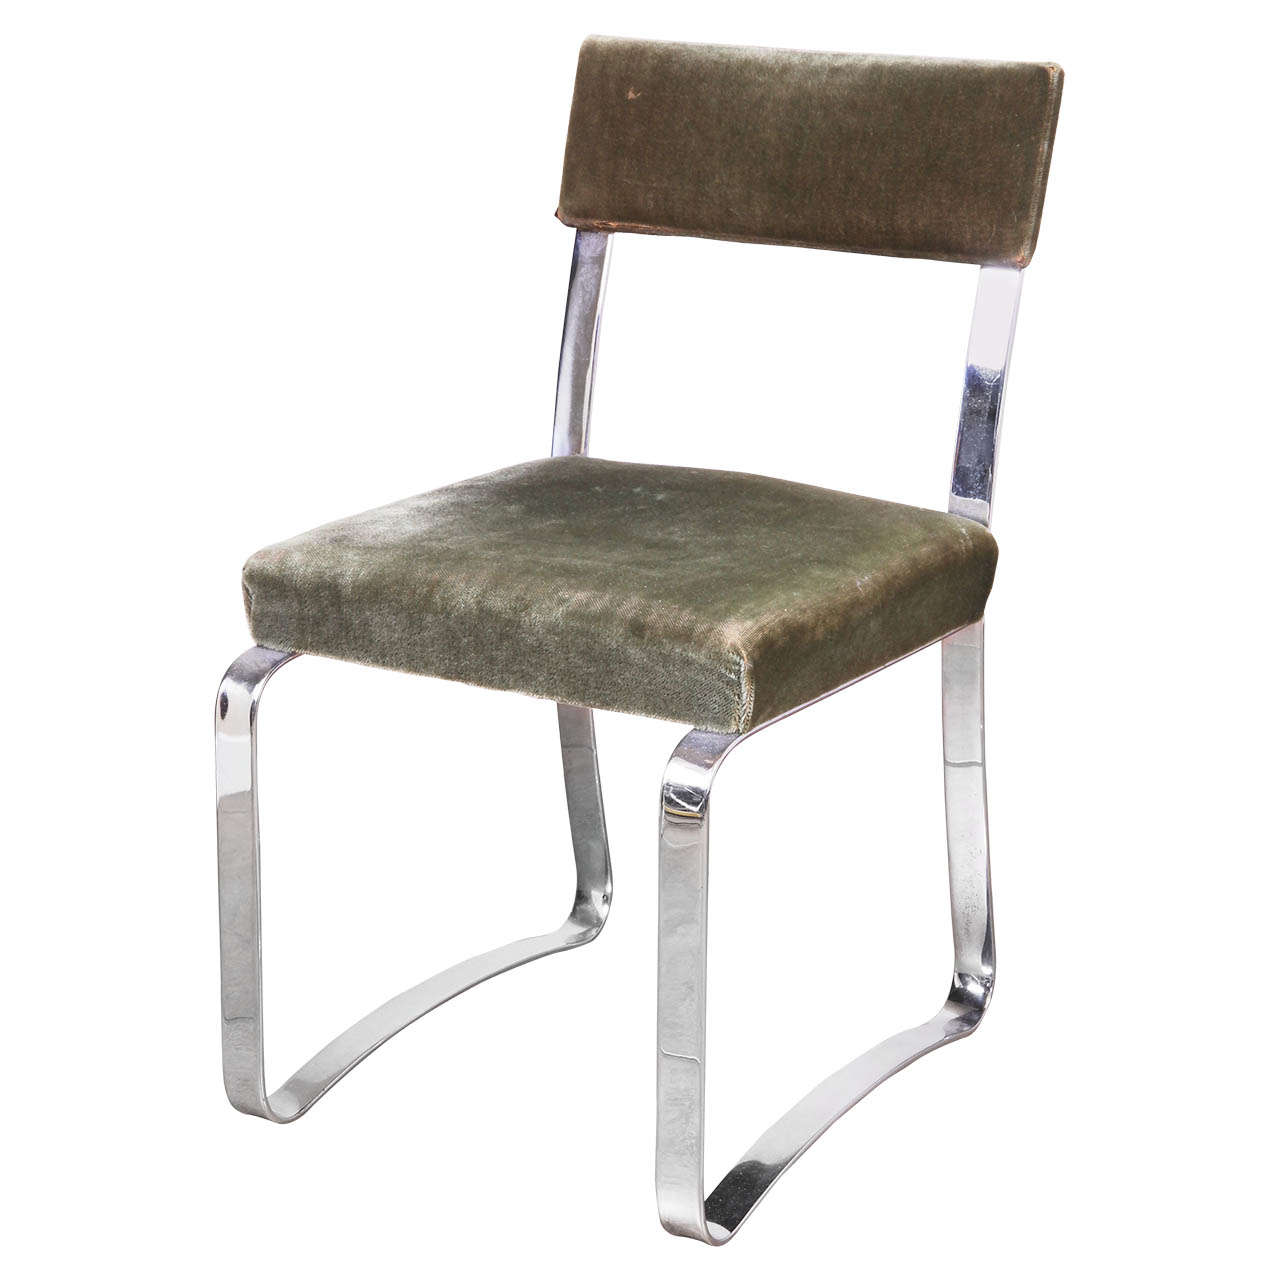 Classic McKay Craft Art Deco Machine Age Side or Desk Chair